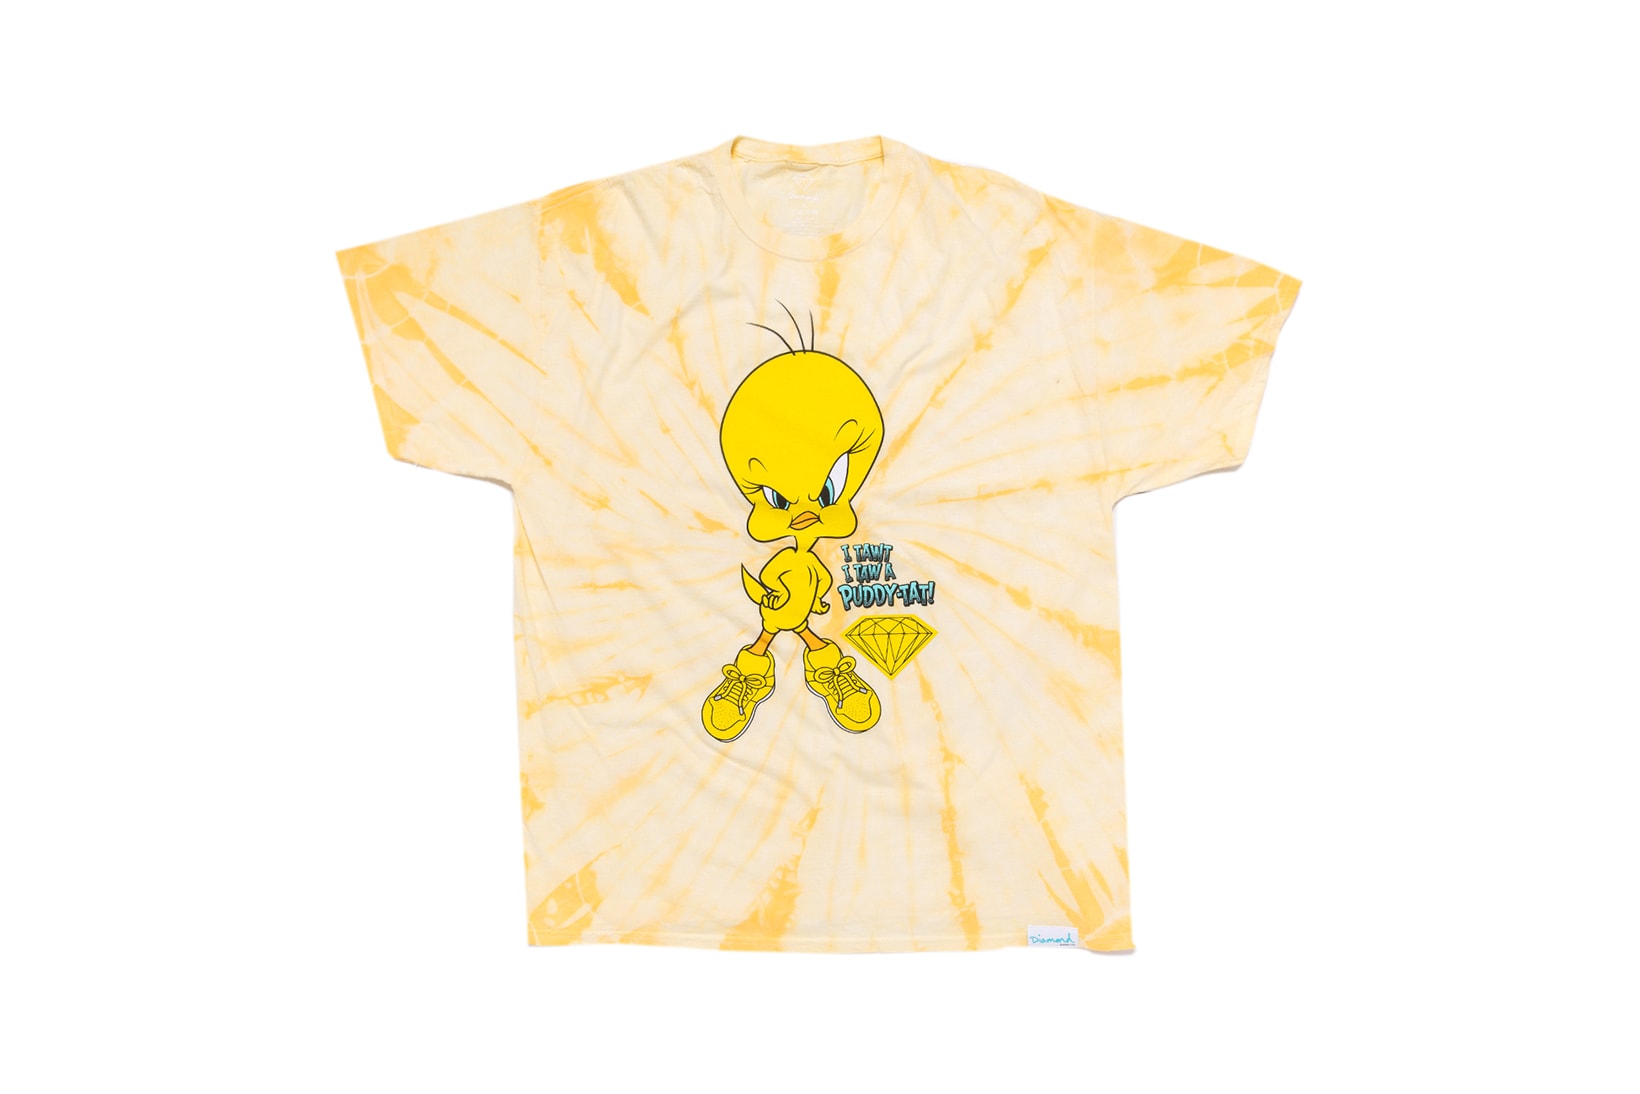 Looney Tunes x Diamond Supply Co. Collection Tweety Bird T-Shirt Puddy-Tat Orange Tie Dye